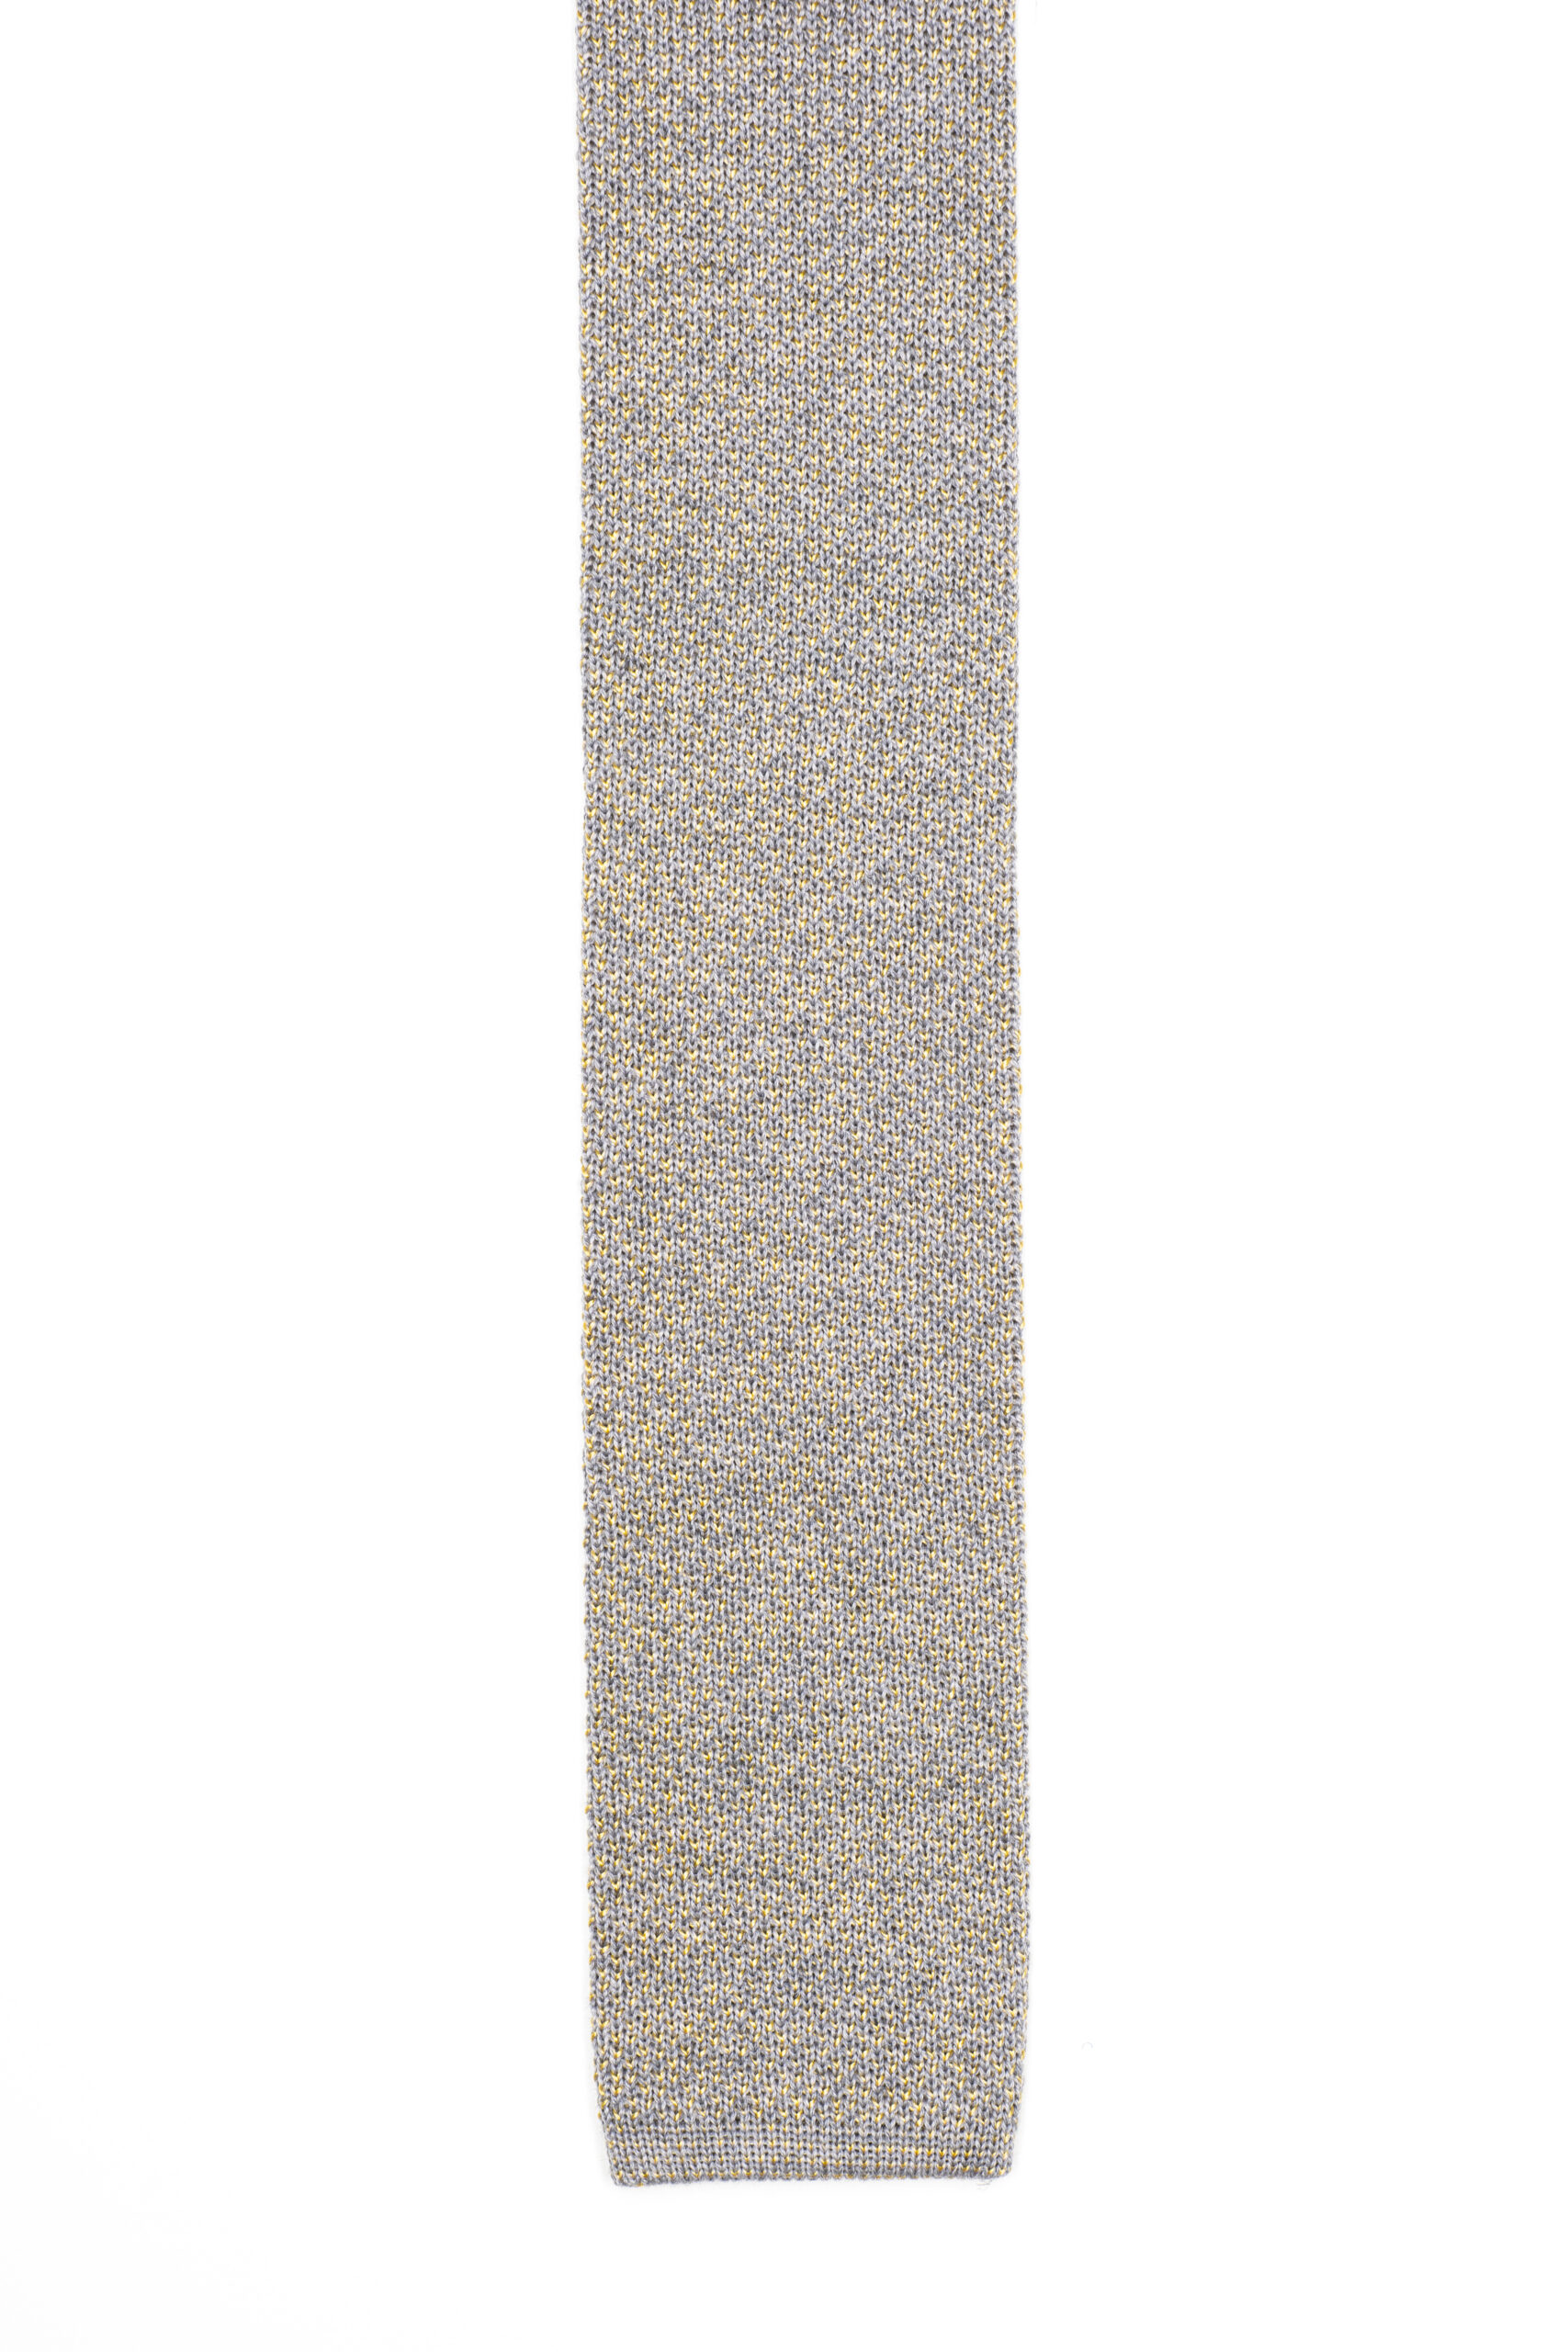 cravatta filo seta grigio beola giallo ginestra 1 scaled